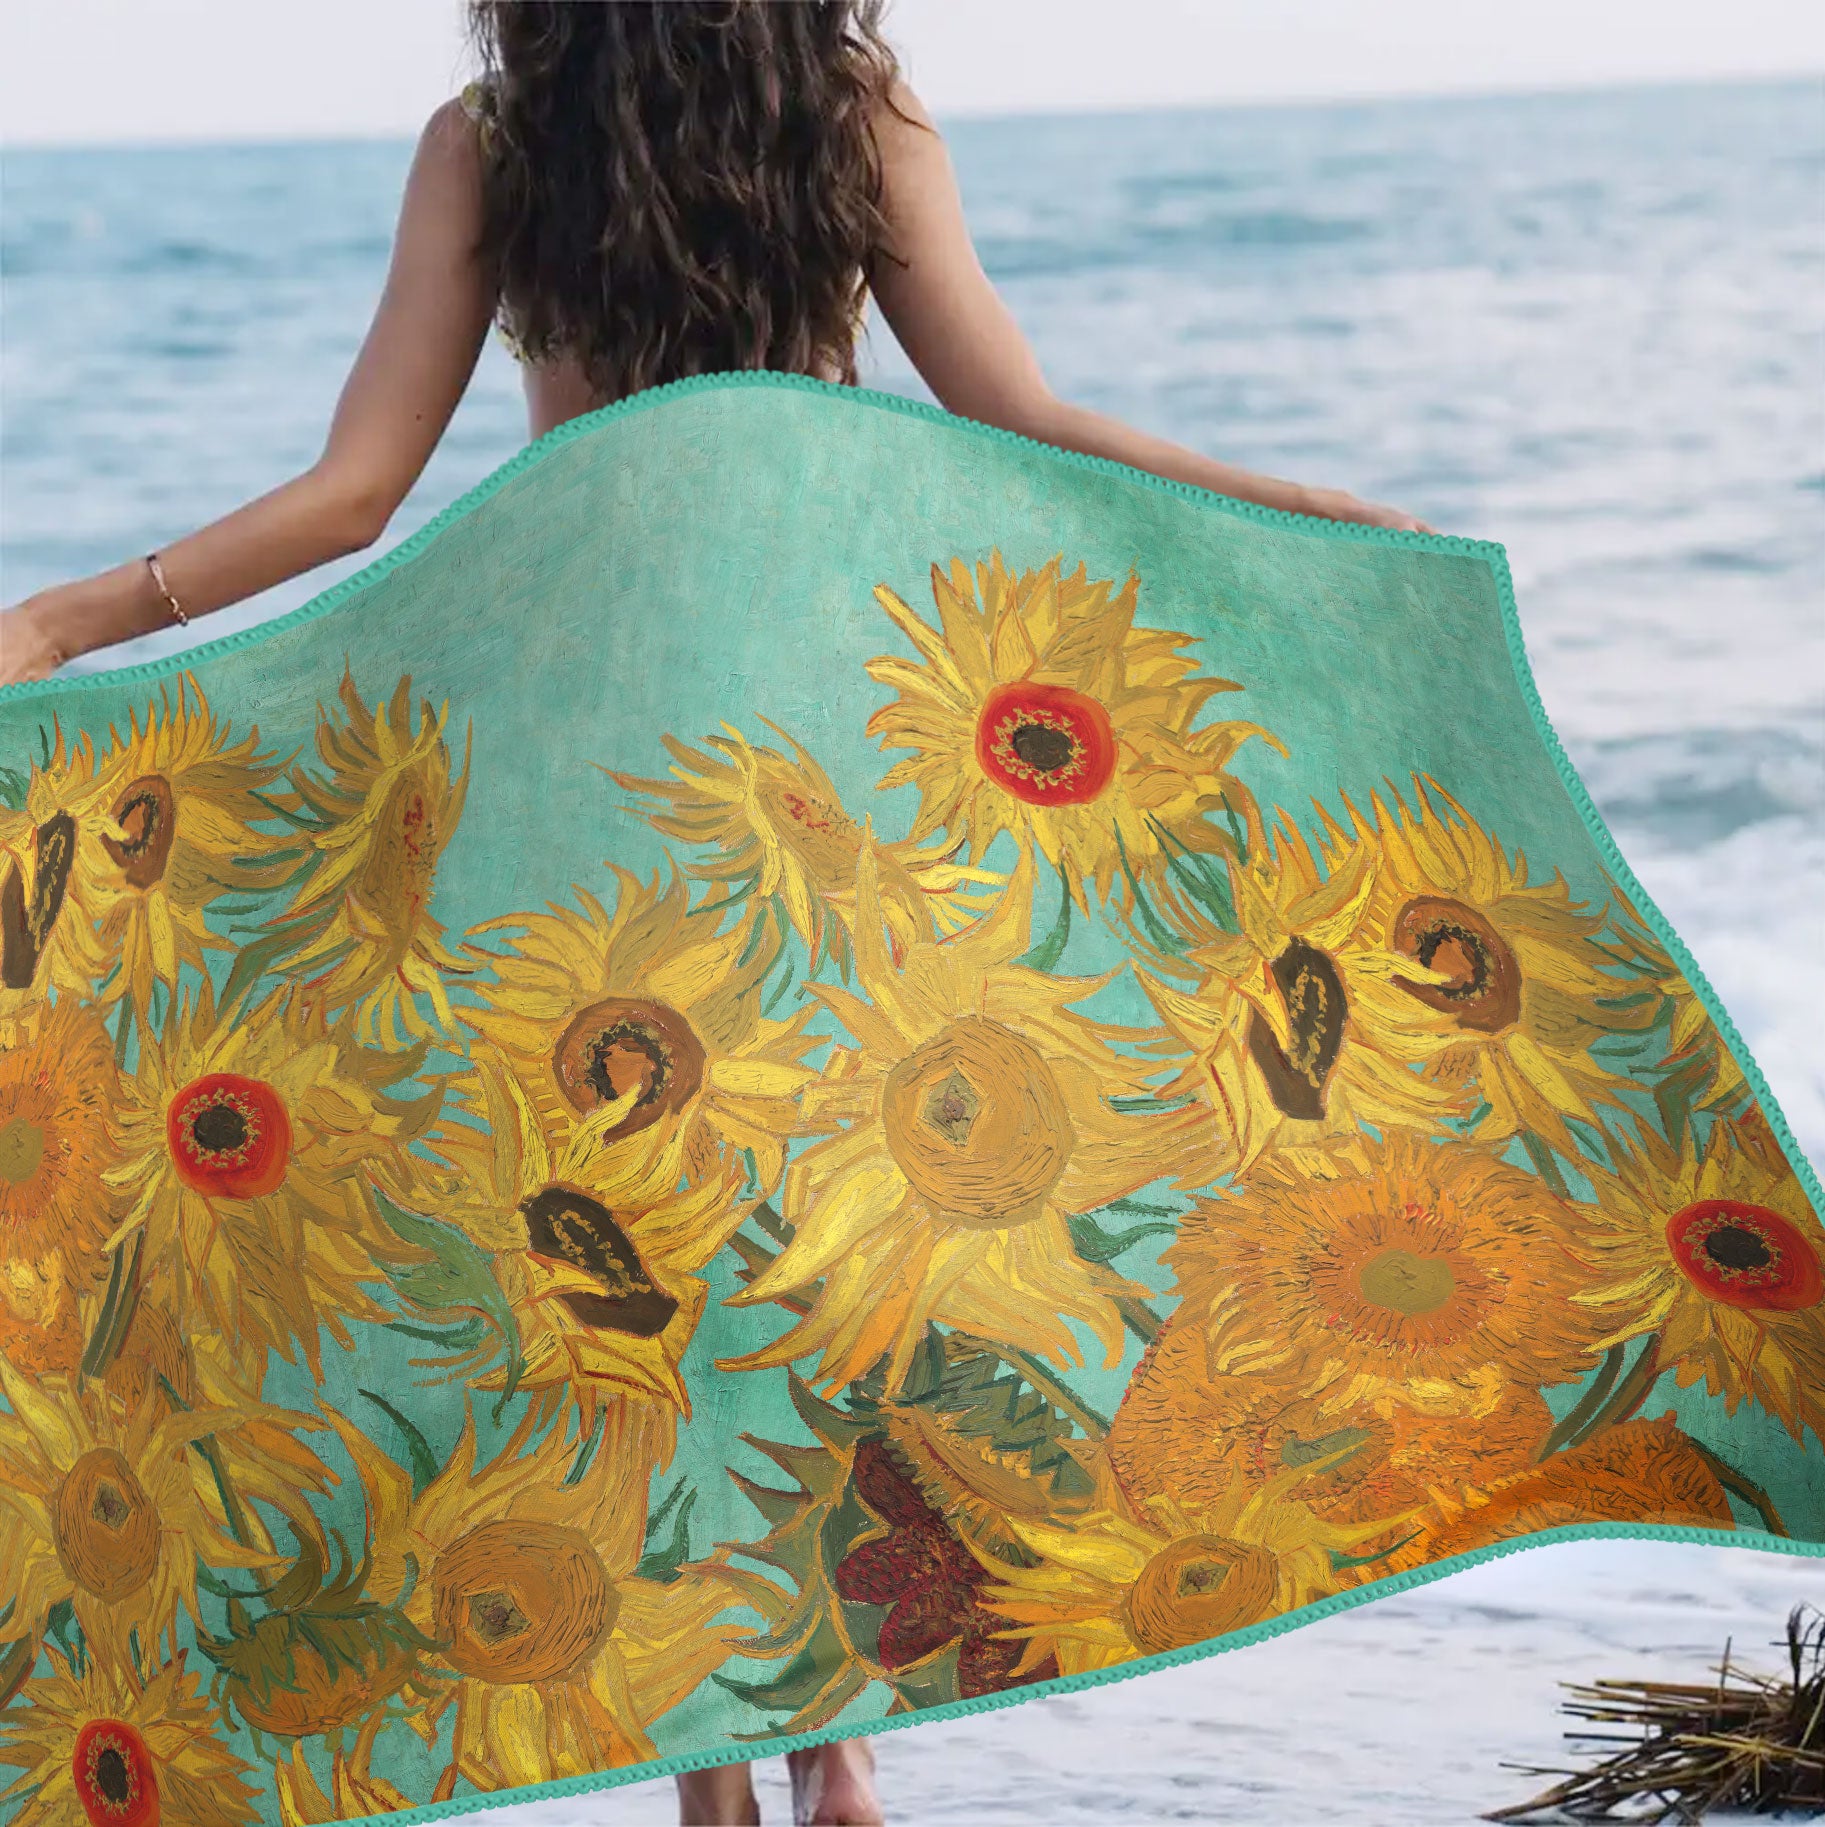 Oversized Beach Towel 40x63" - Microfiber, Quick-Dry, van Gogh Sunflowers